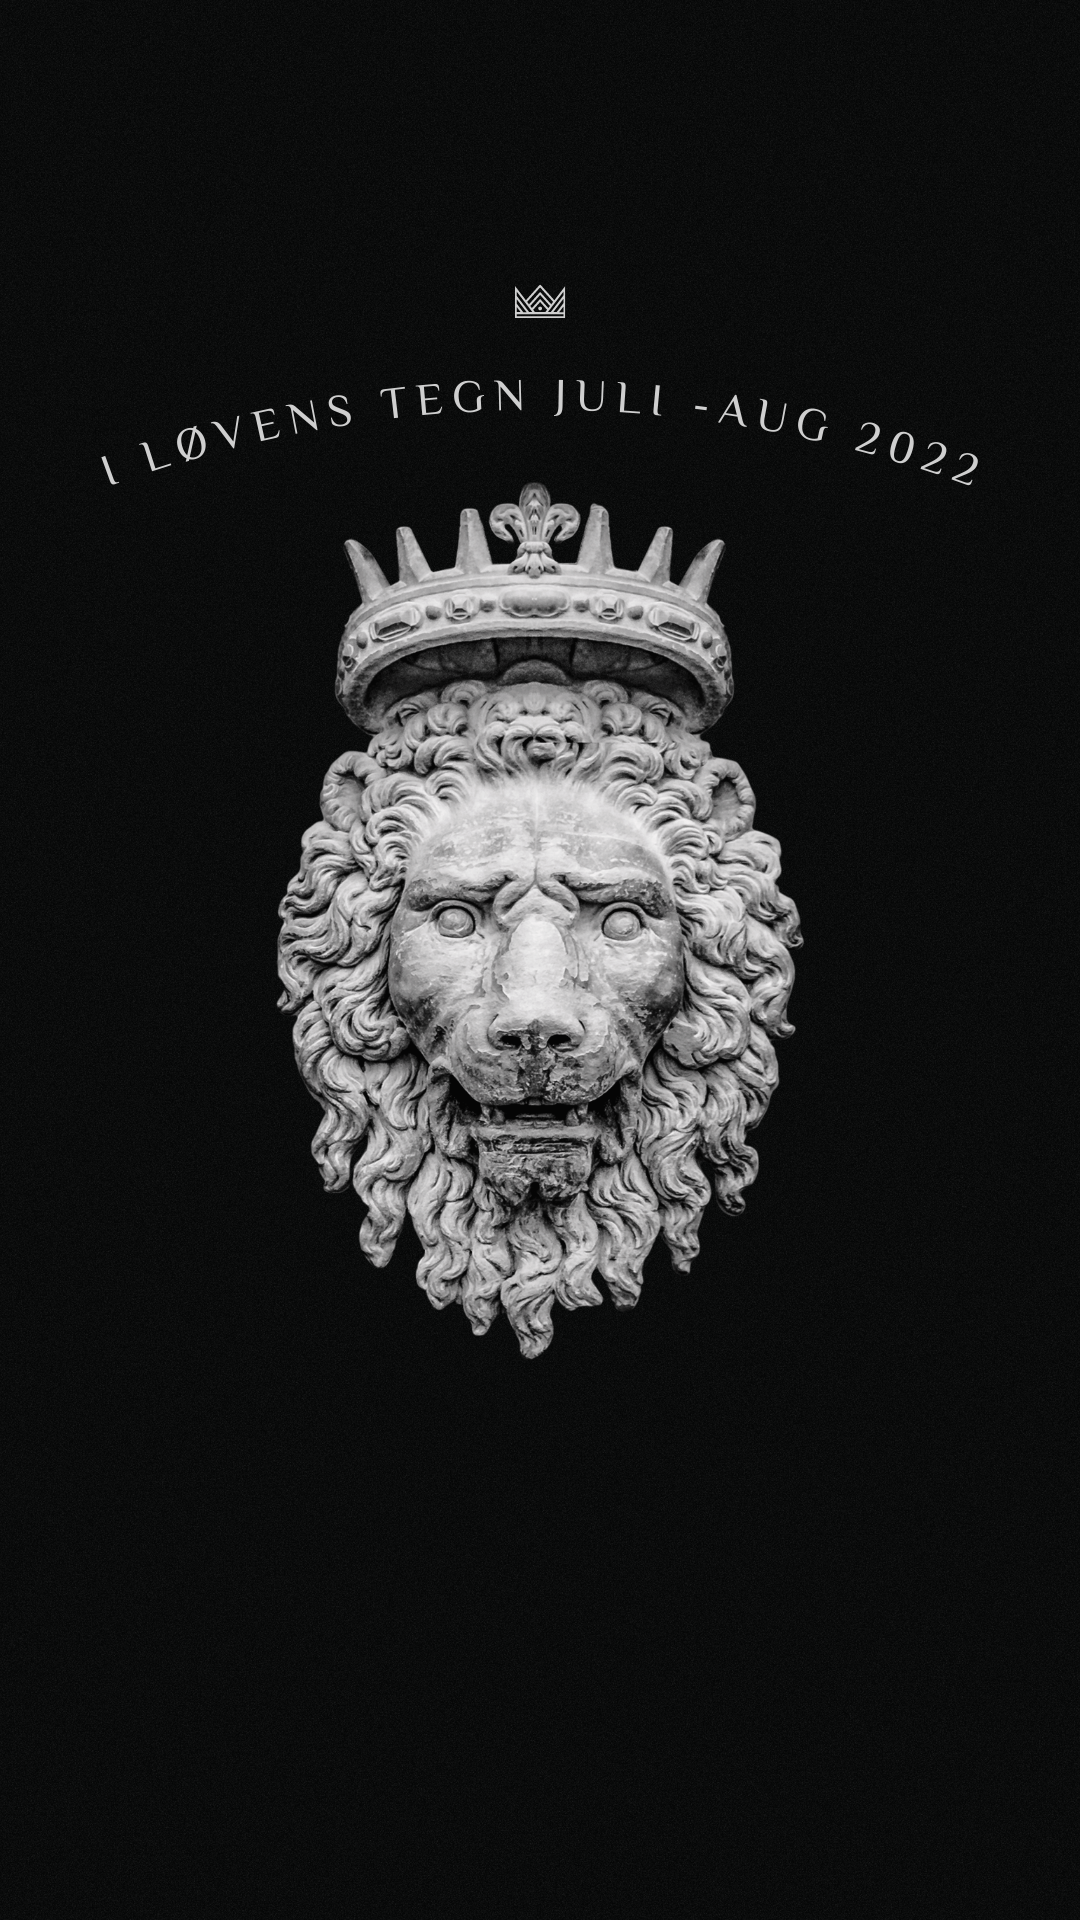 Black Vintage Lion with Crown Sculpture Motivational Quote Phone Wallpaper